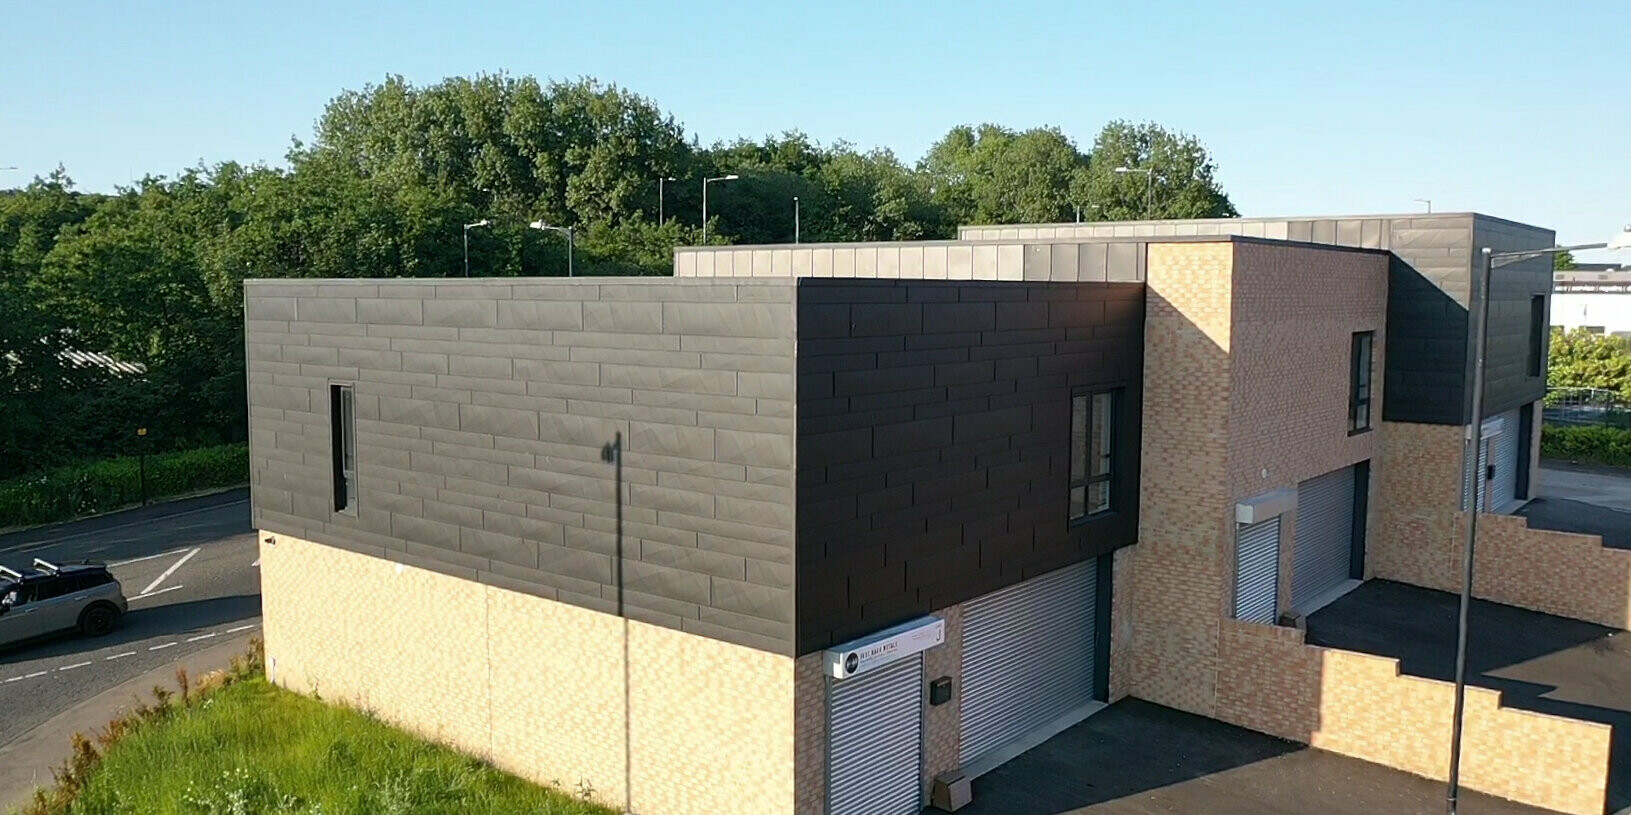 Just Hard Metals company building with façade made of PREFA Siding.X and bricks